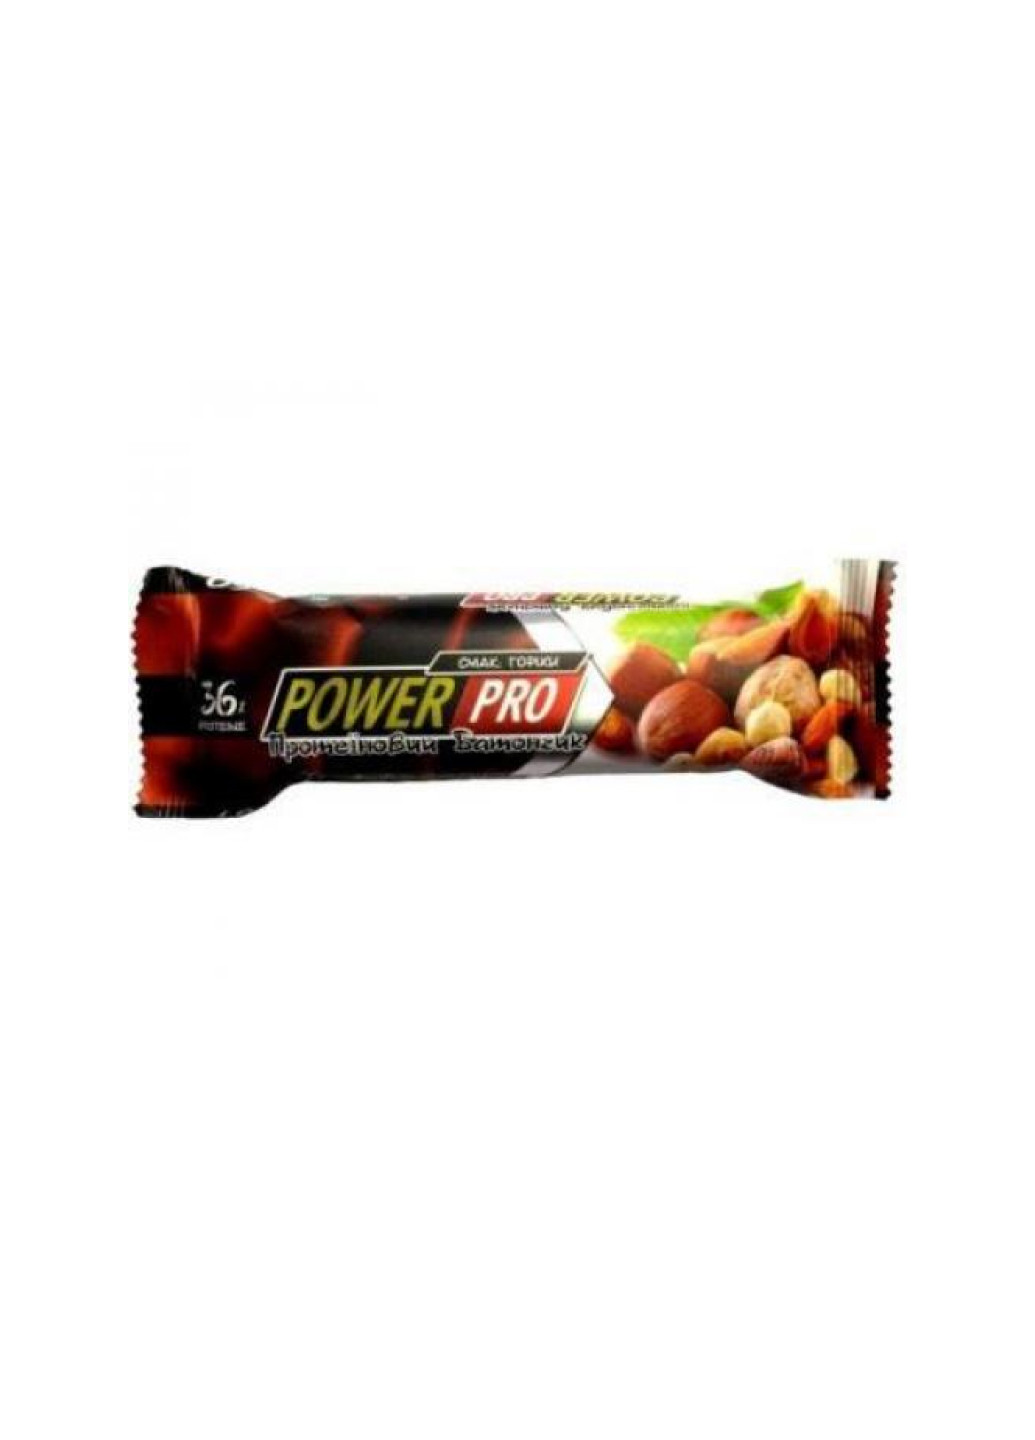 Дієтичне харчування для енергії Protein Bar Nutella 36% 20x60g Yogurt Nut Power Pro (251857843)